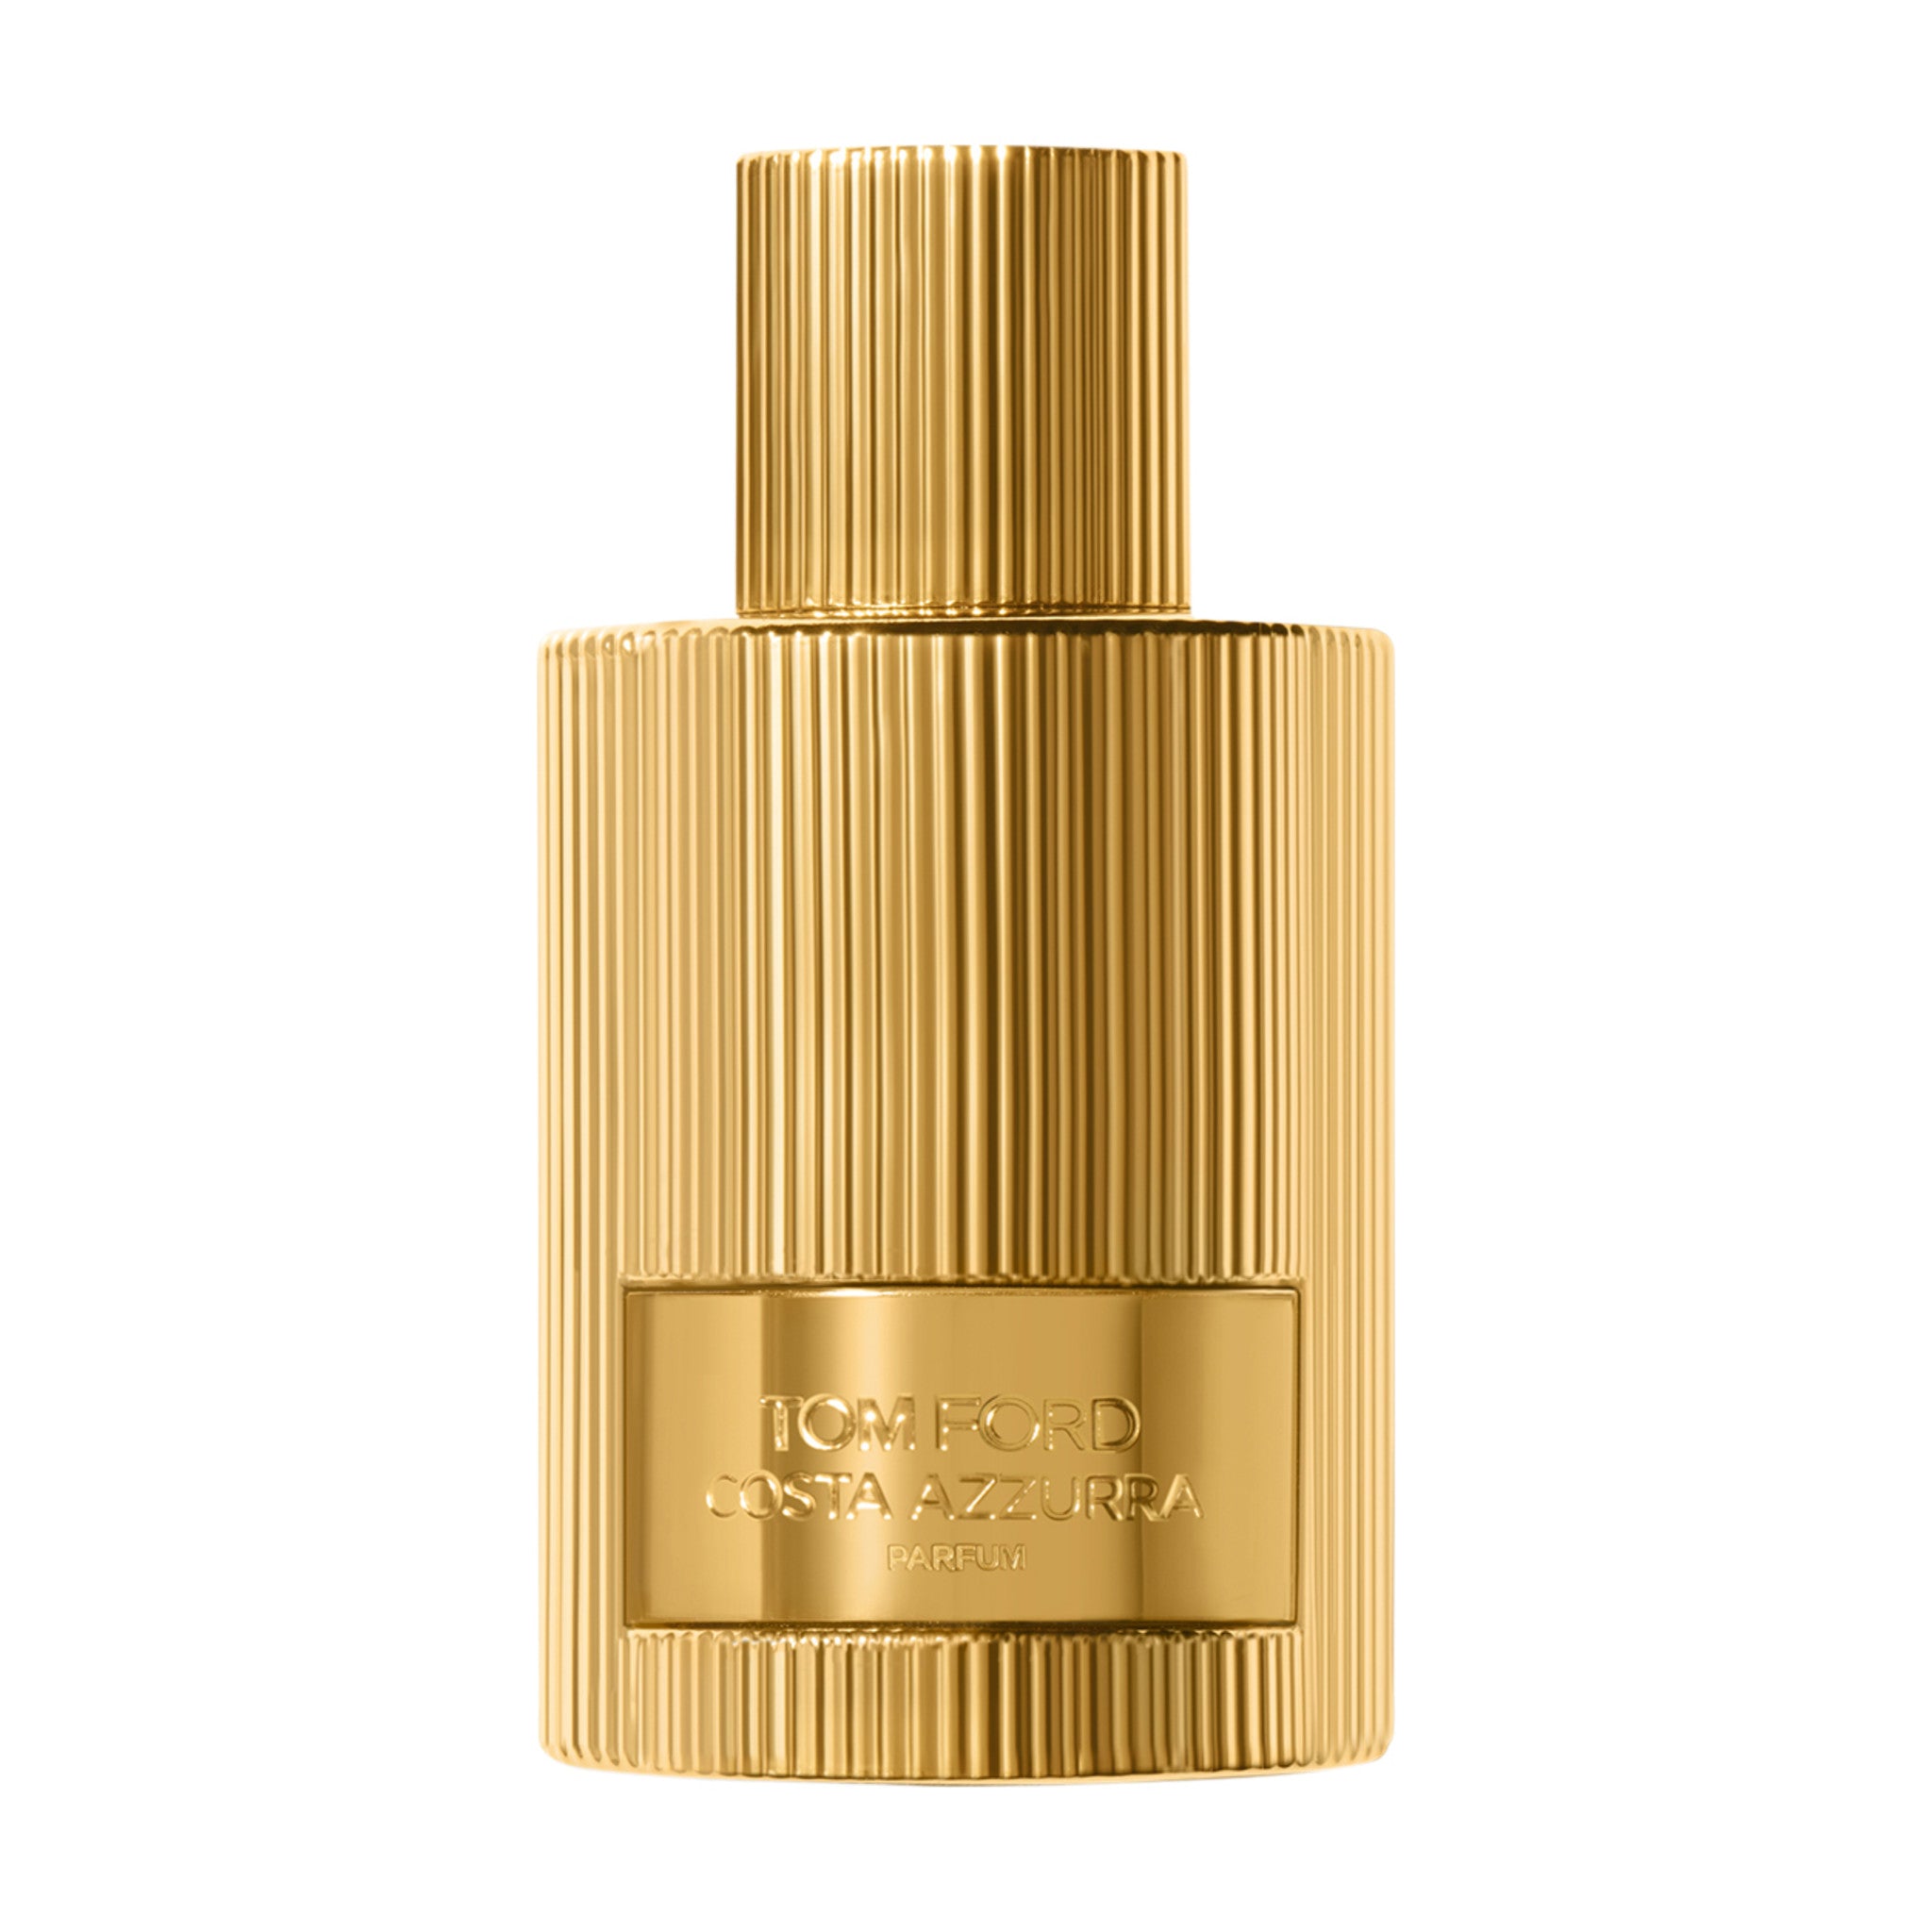 Tom Ford Costa Azzurra Parfum Size variant: 3.4 oz | 100 ml main image.